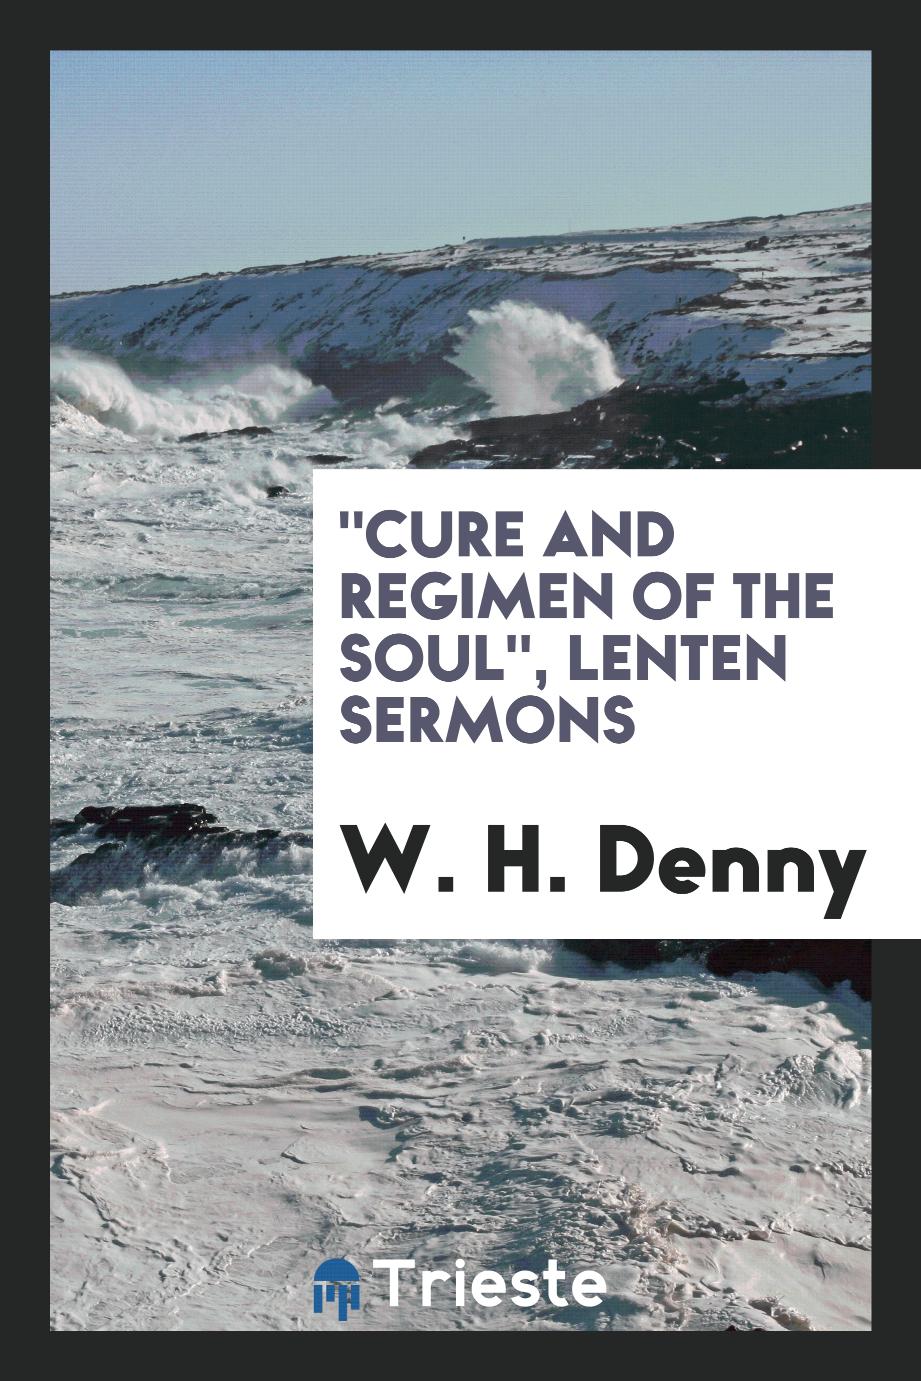 "Cure and regimen of the soul", lenten sermons